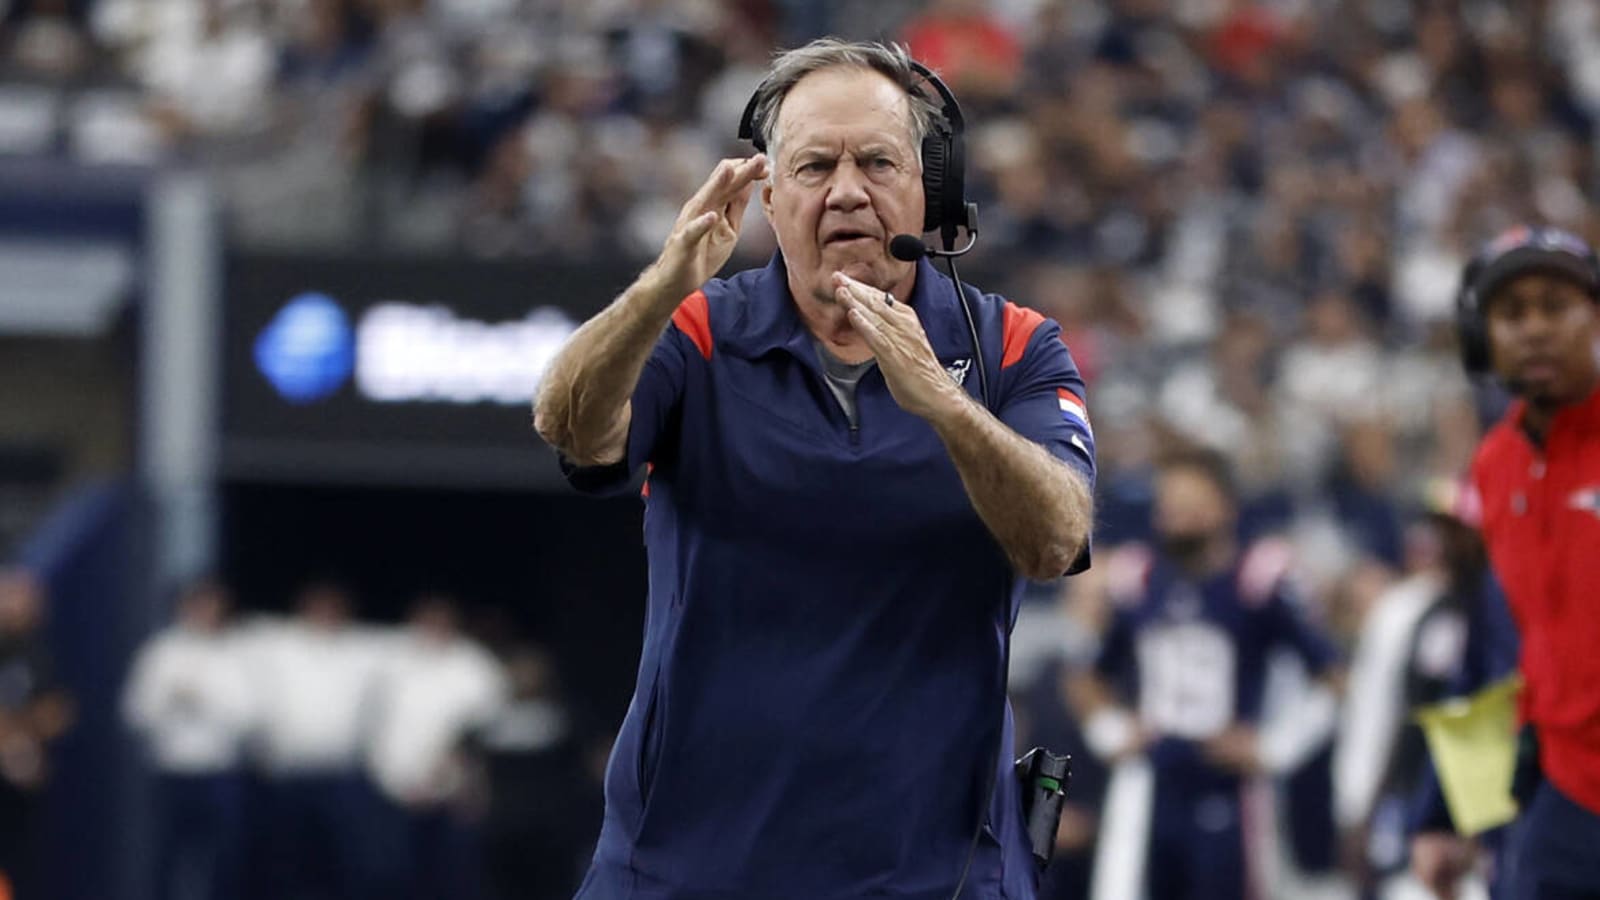 Ex-Patriots star shares whether he thinks Bill Belichick will retire